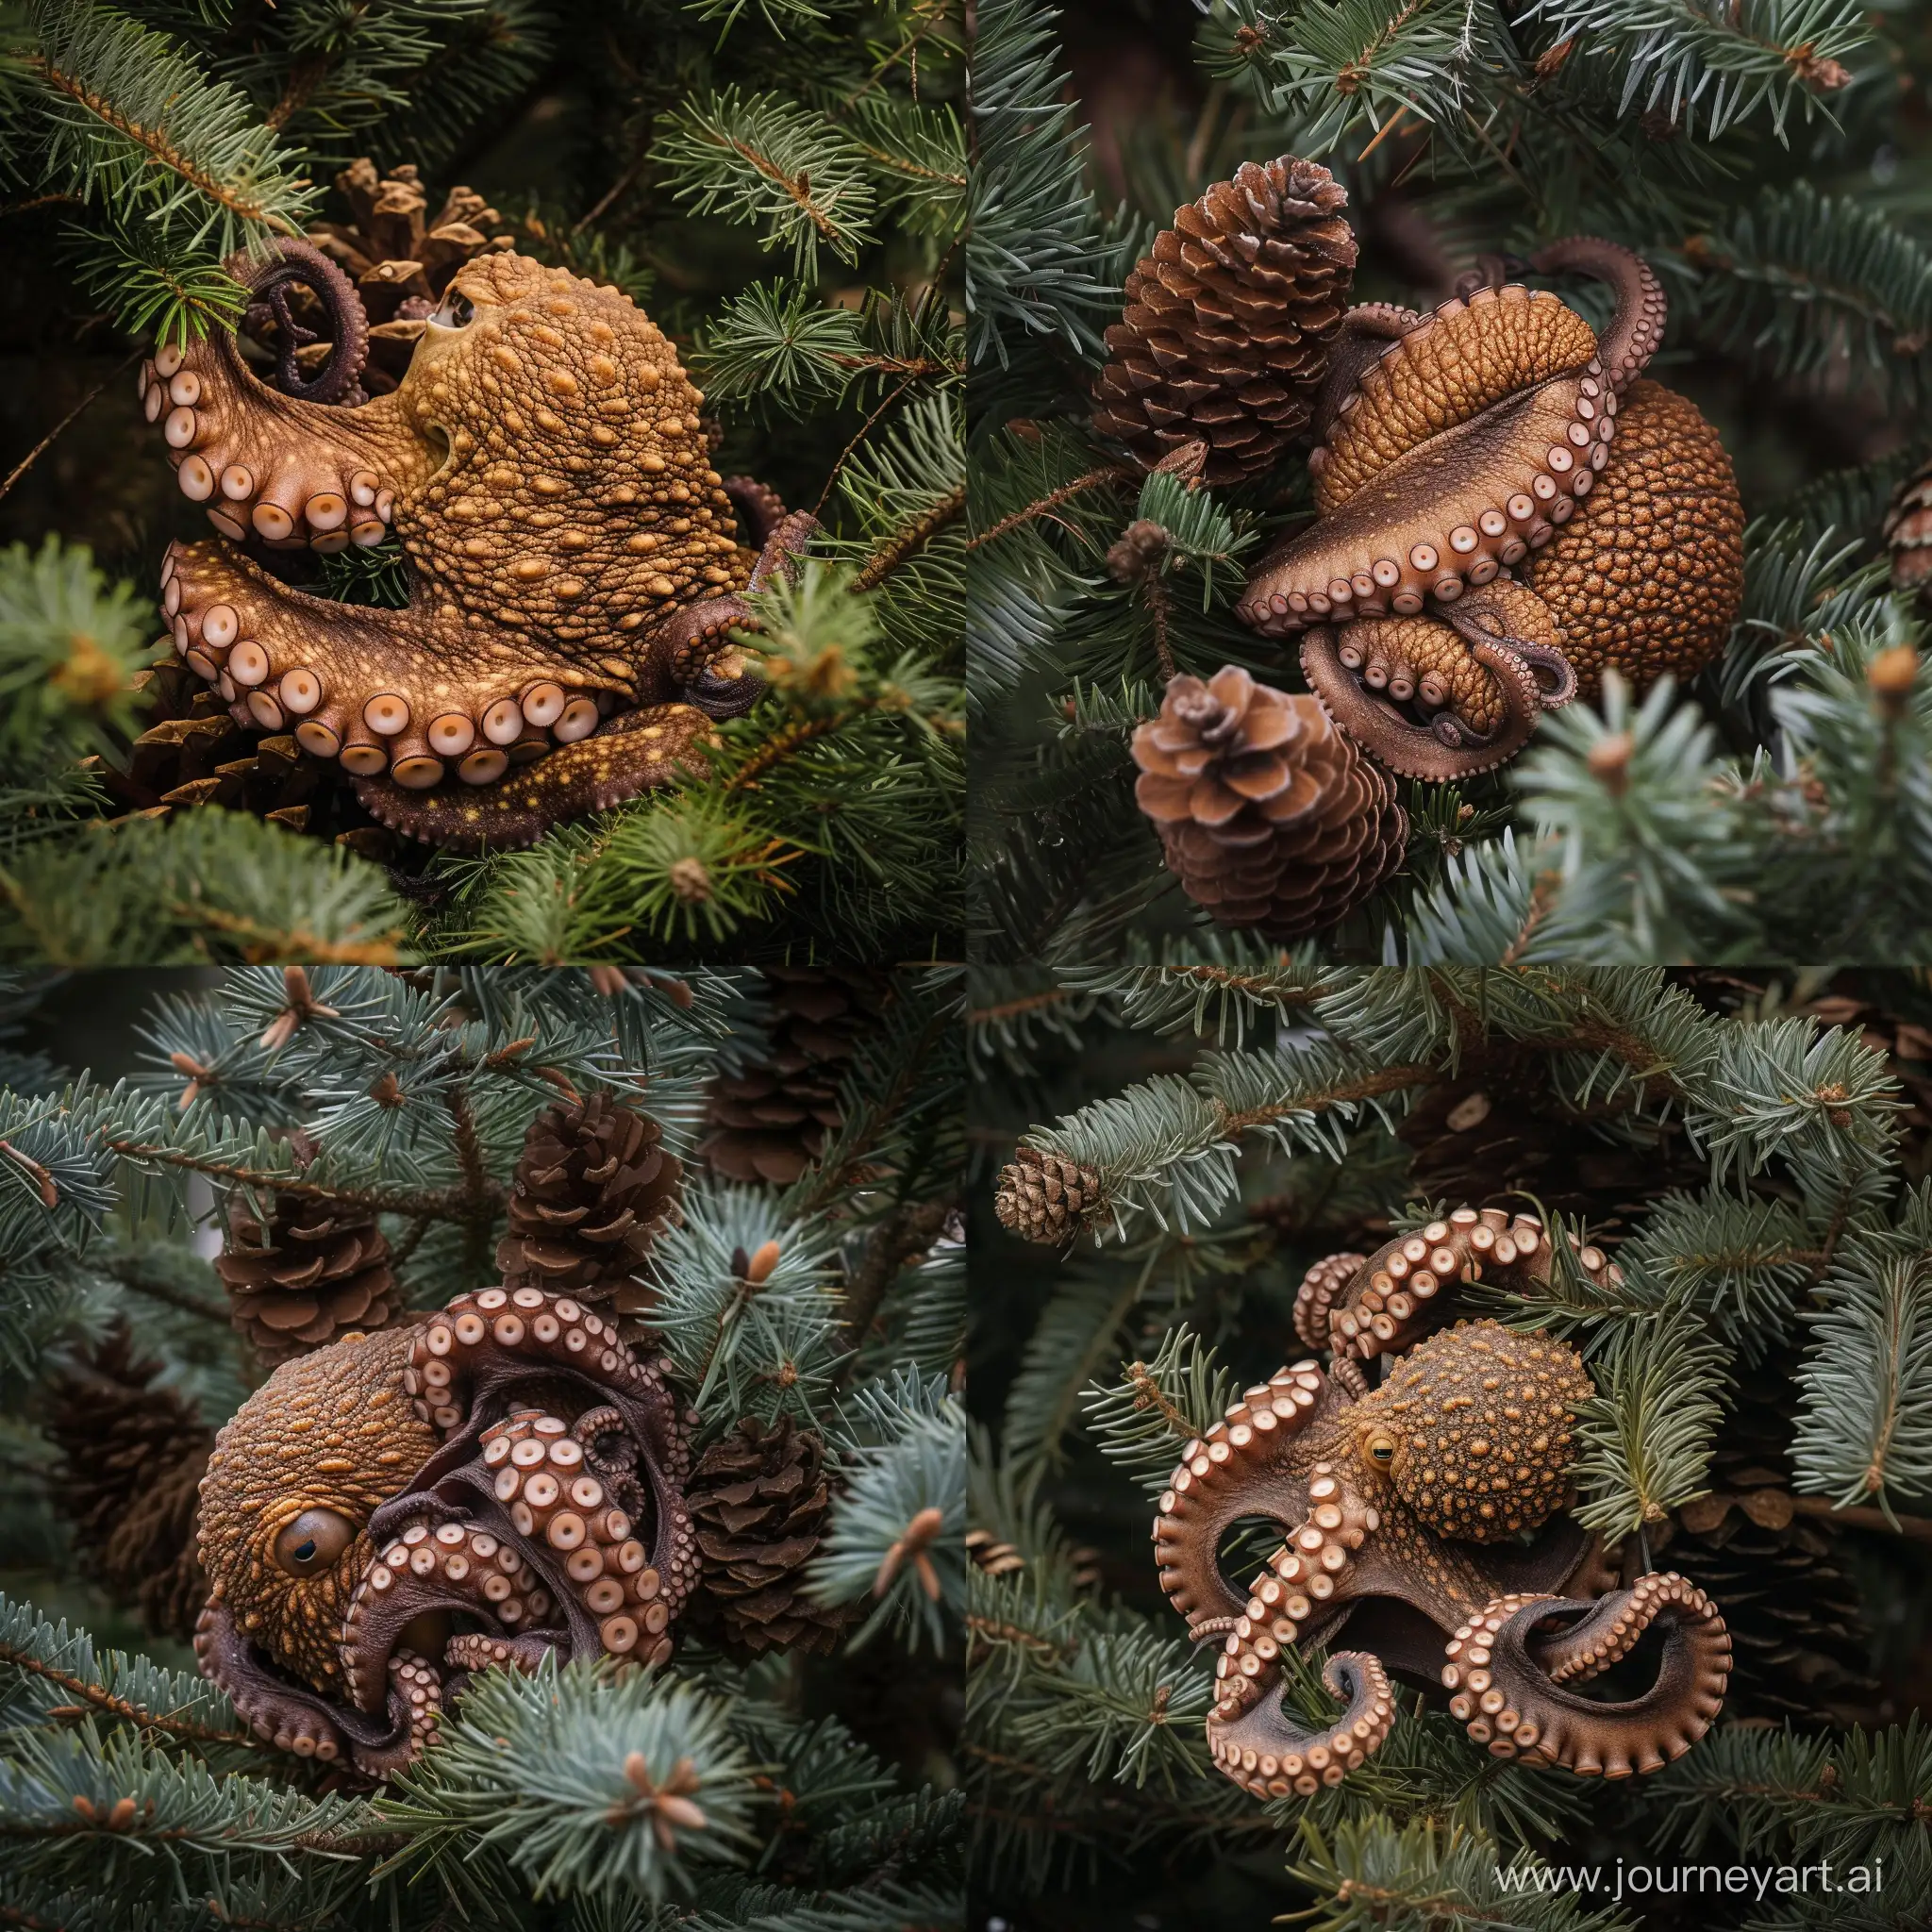 Camouflaged-Octopus-in-Pine-Tree-Hidden-Wildlife-Encounter